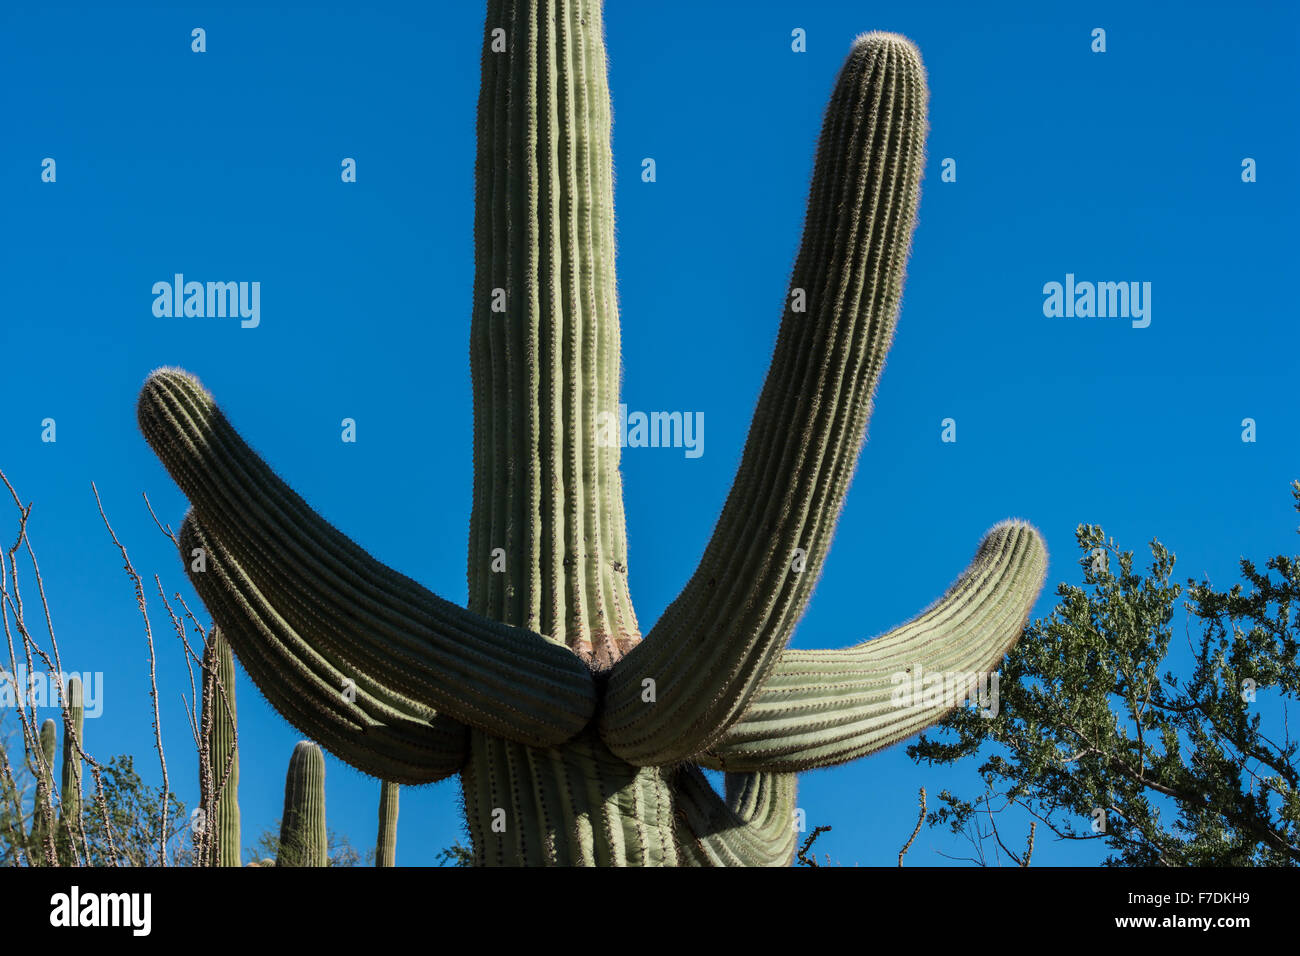 Zweige von einem gigantischen Saguaro Kaktus (Carnegiea Gigantea) im Saguaro National Park, Tucson, Arizona, USA. Stockfoto